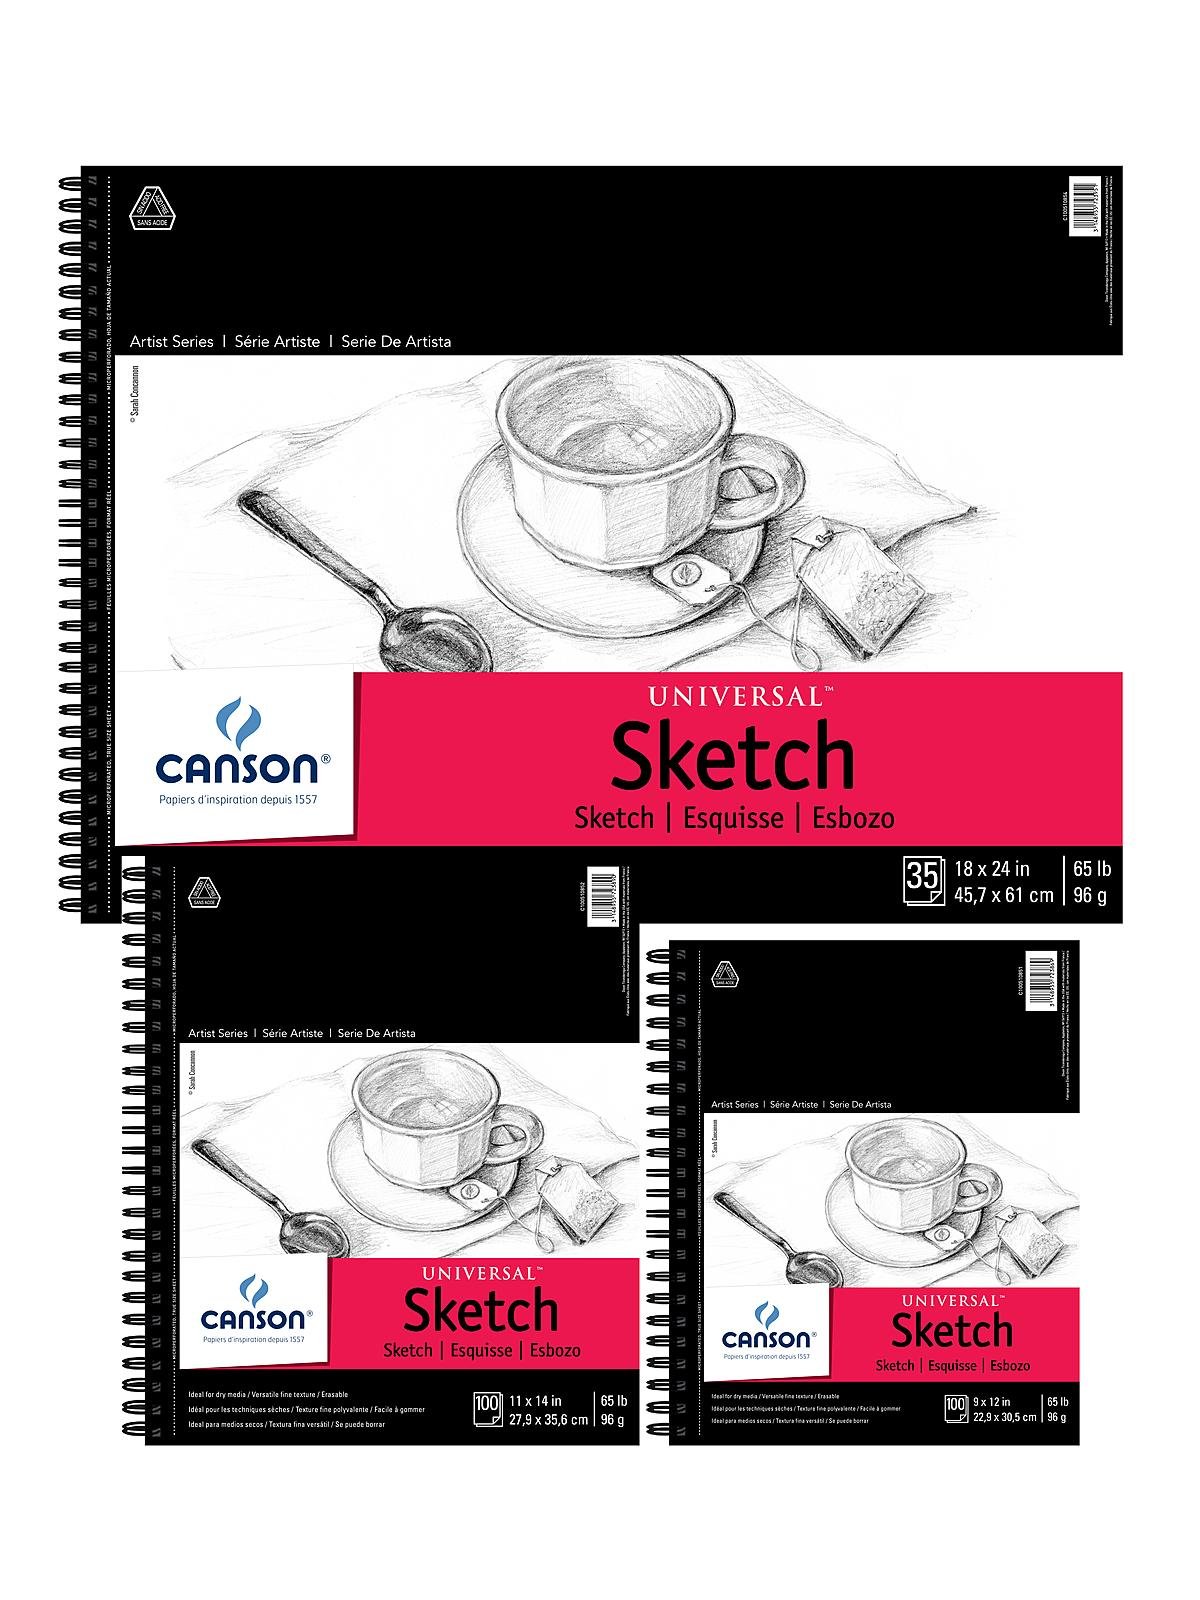 Canson Universal Sketch Pad 18x24 | plazaart.com